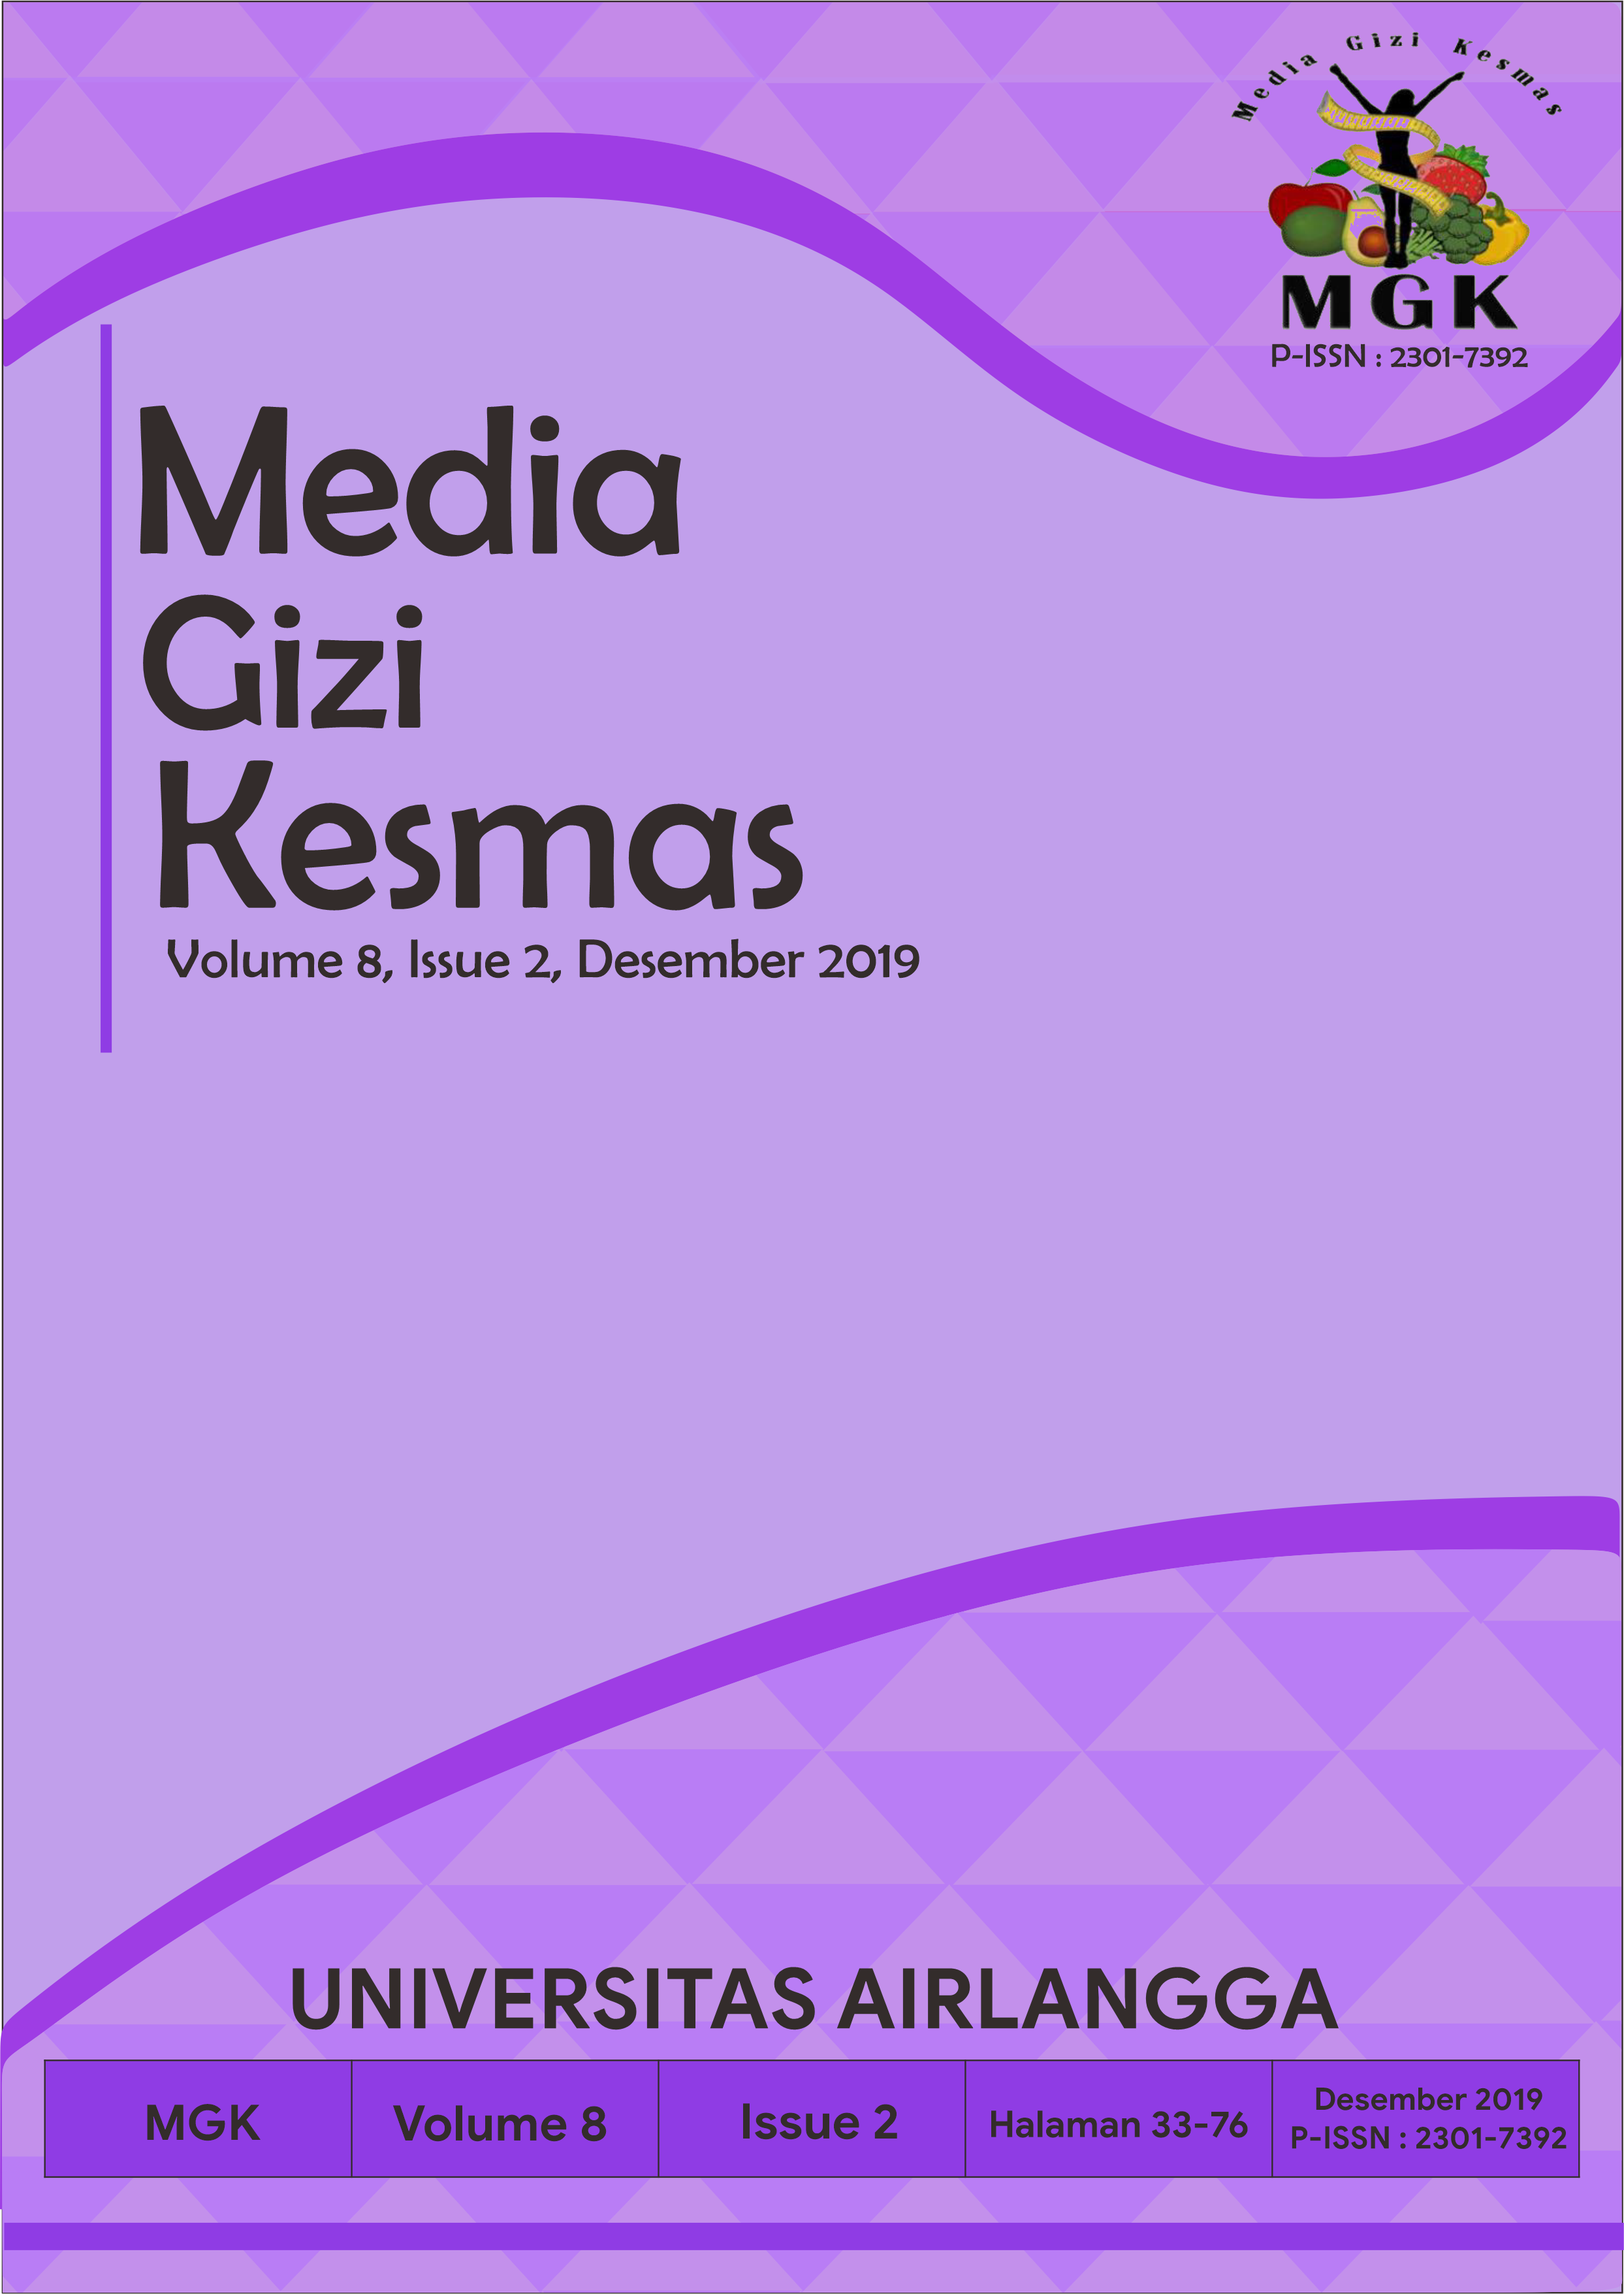 						View Vol. 8 No. 2 (2019): MEDIA GIZI KESMAS (DECEMBER 2019)
					